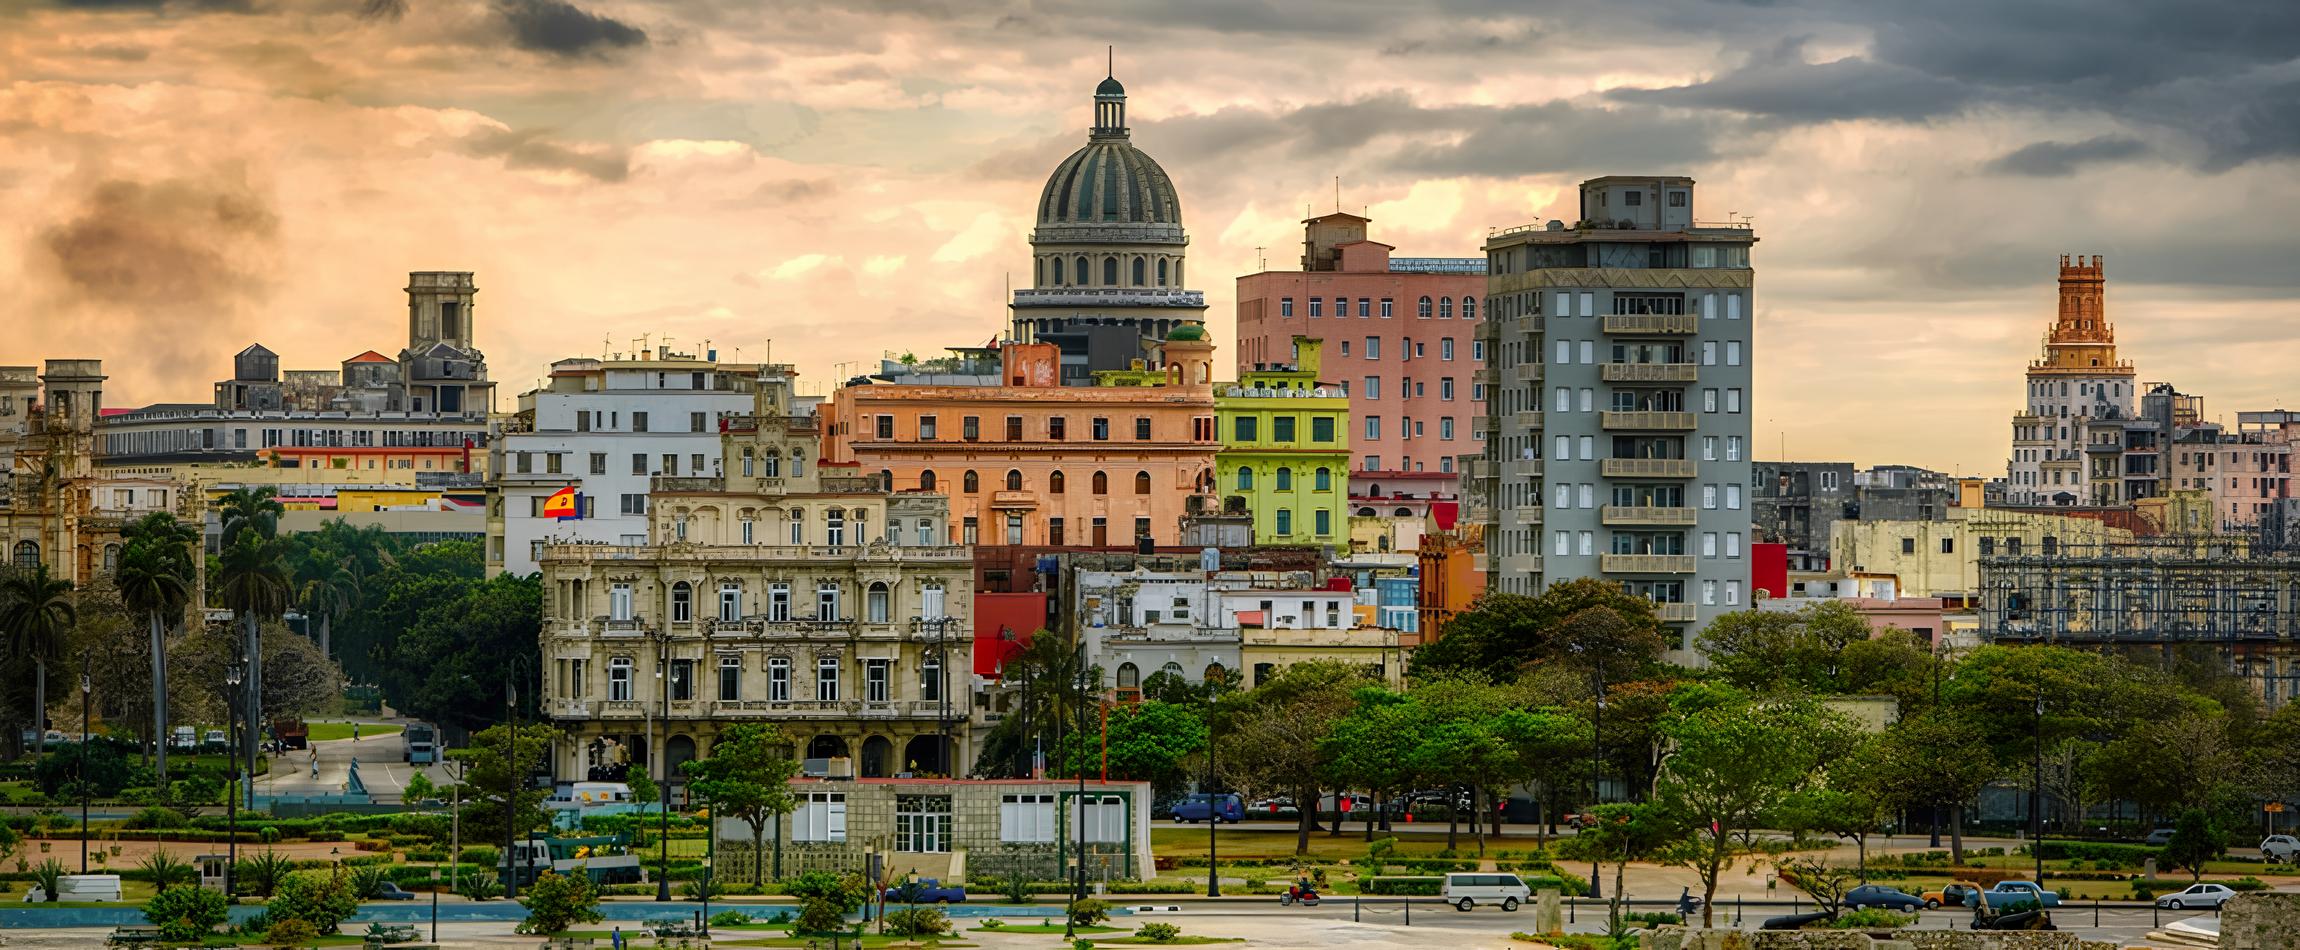 Cuba travel tips 